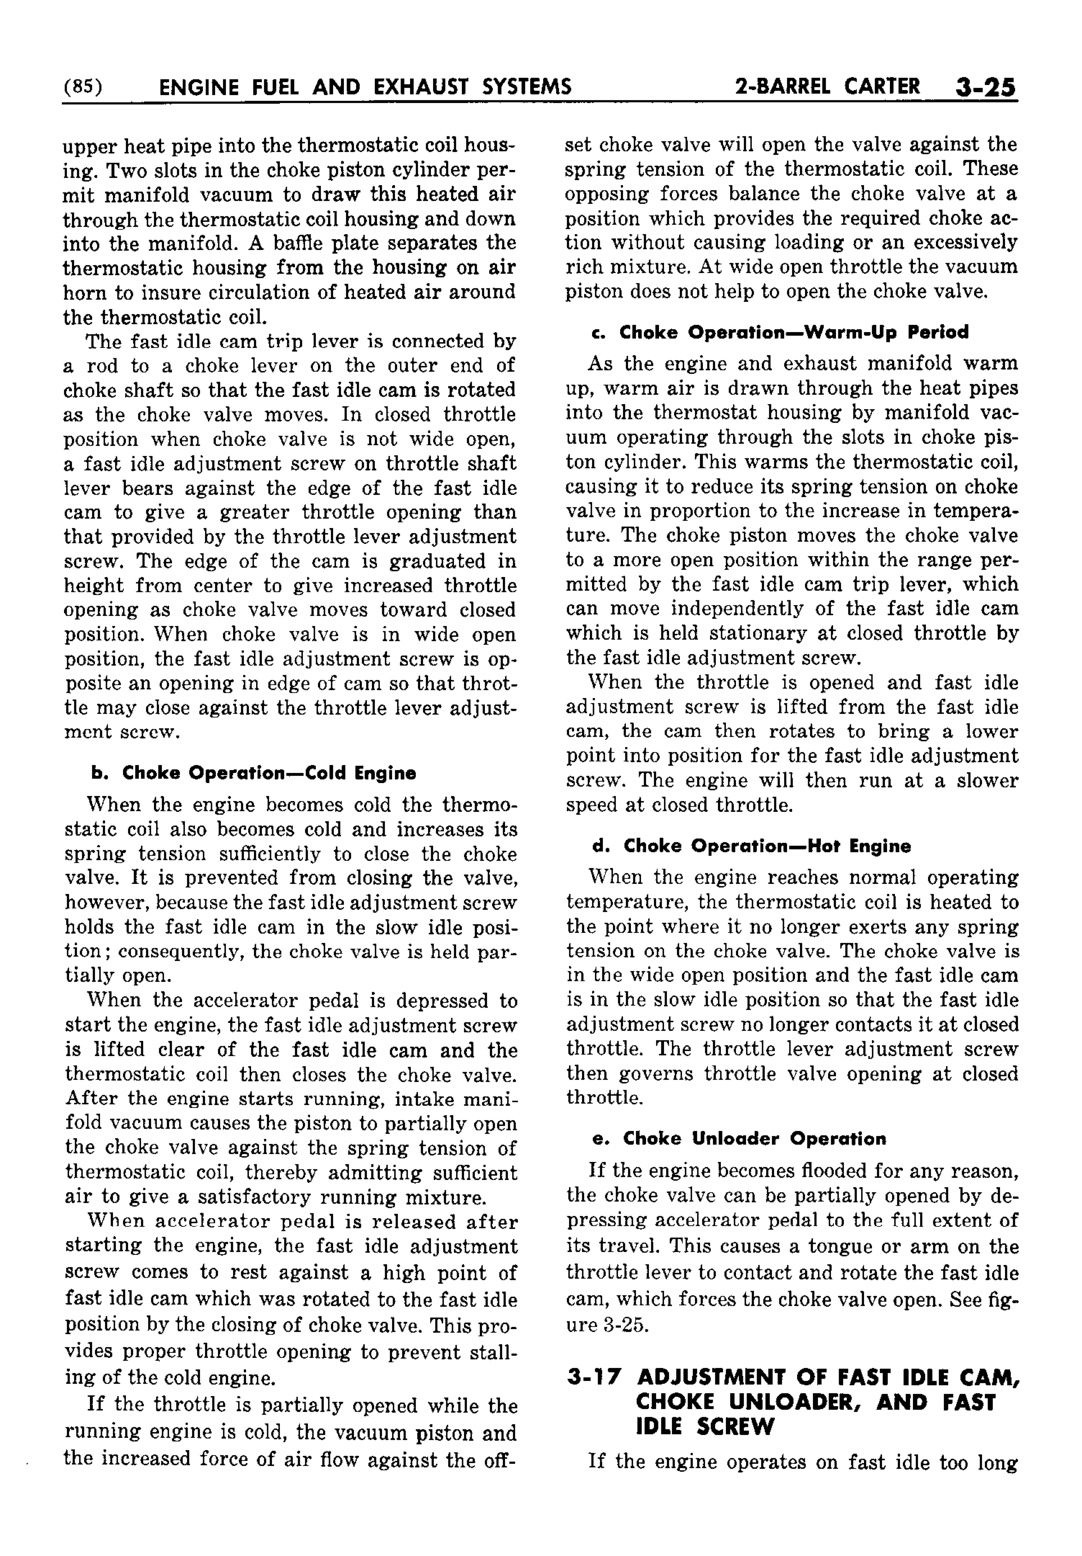 n_04 1953 Buick Shop Manual - Engine Fuel & Exhaust-025-025.jpg